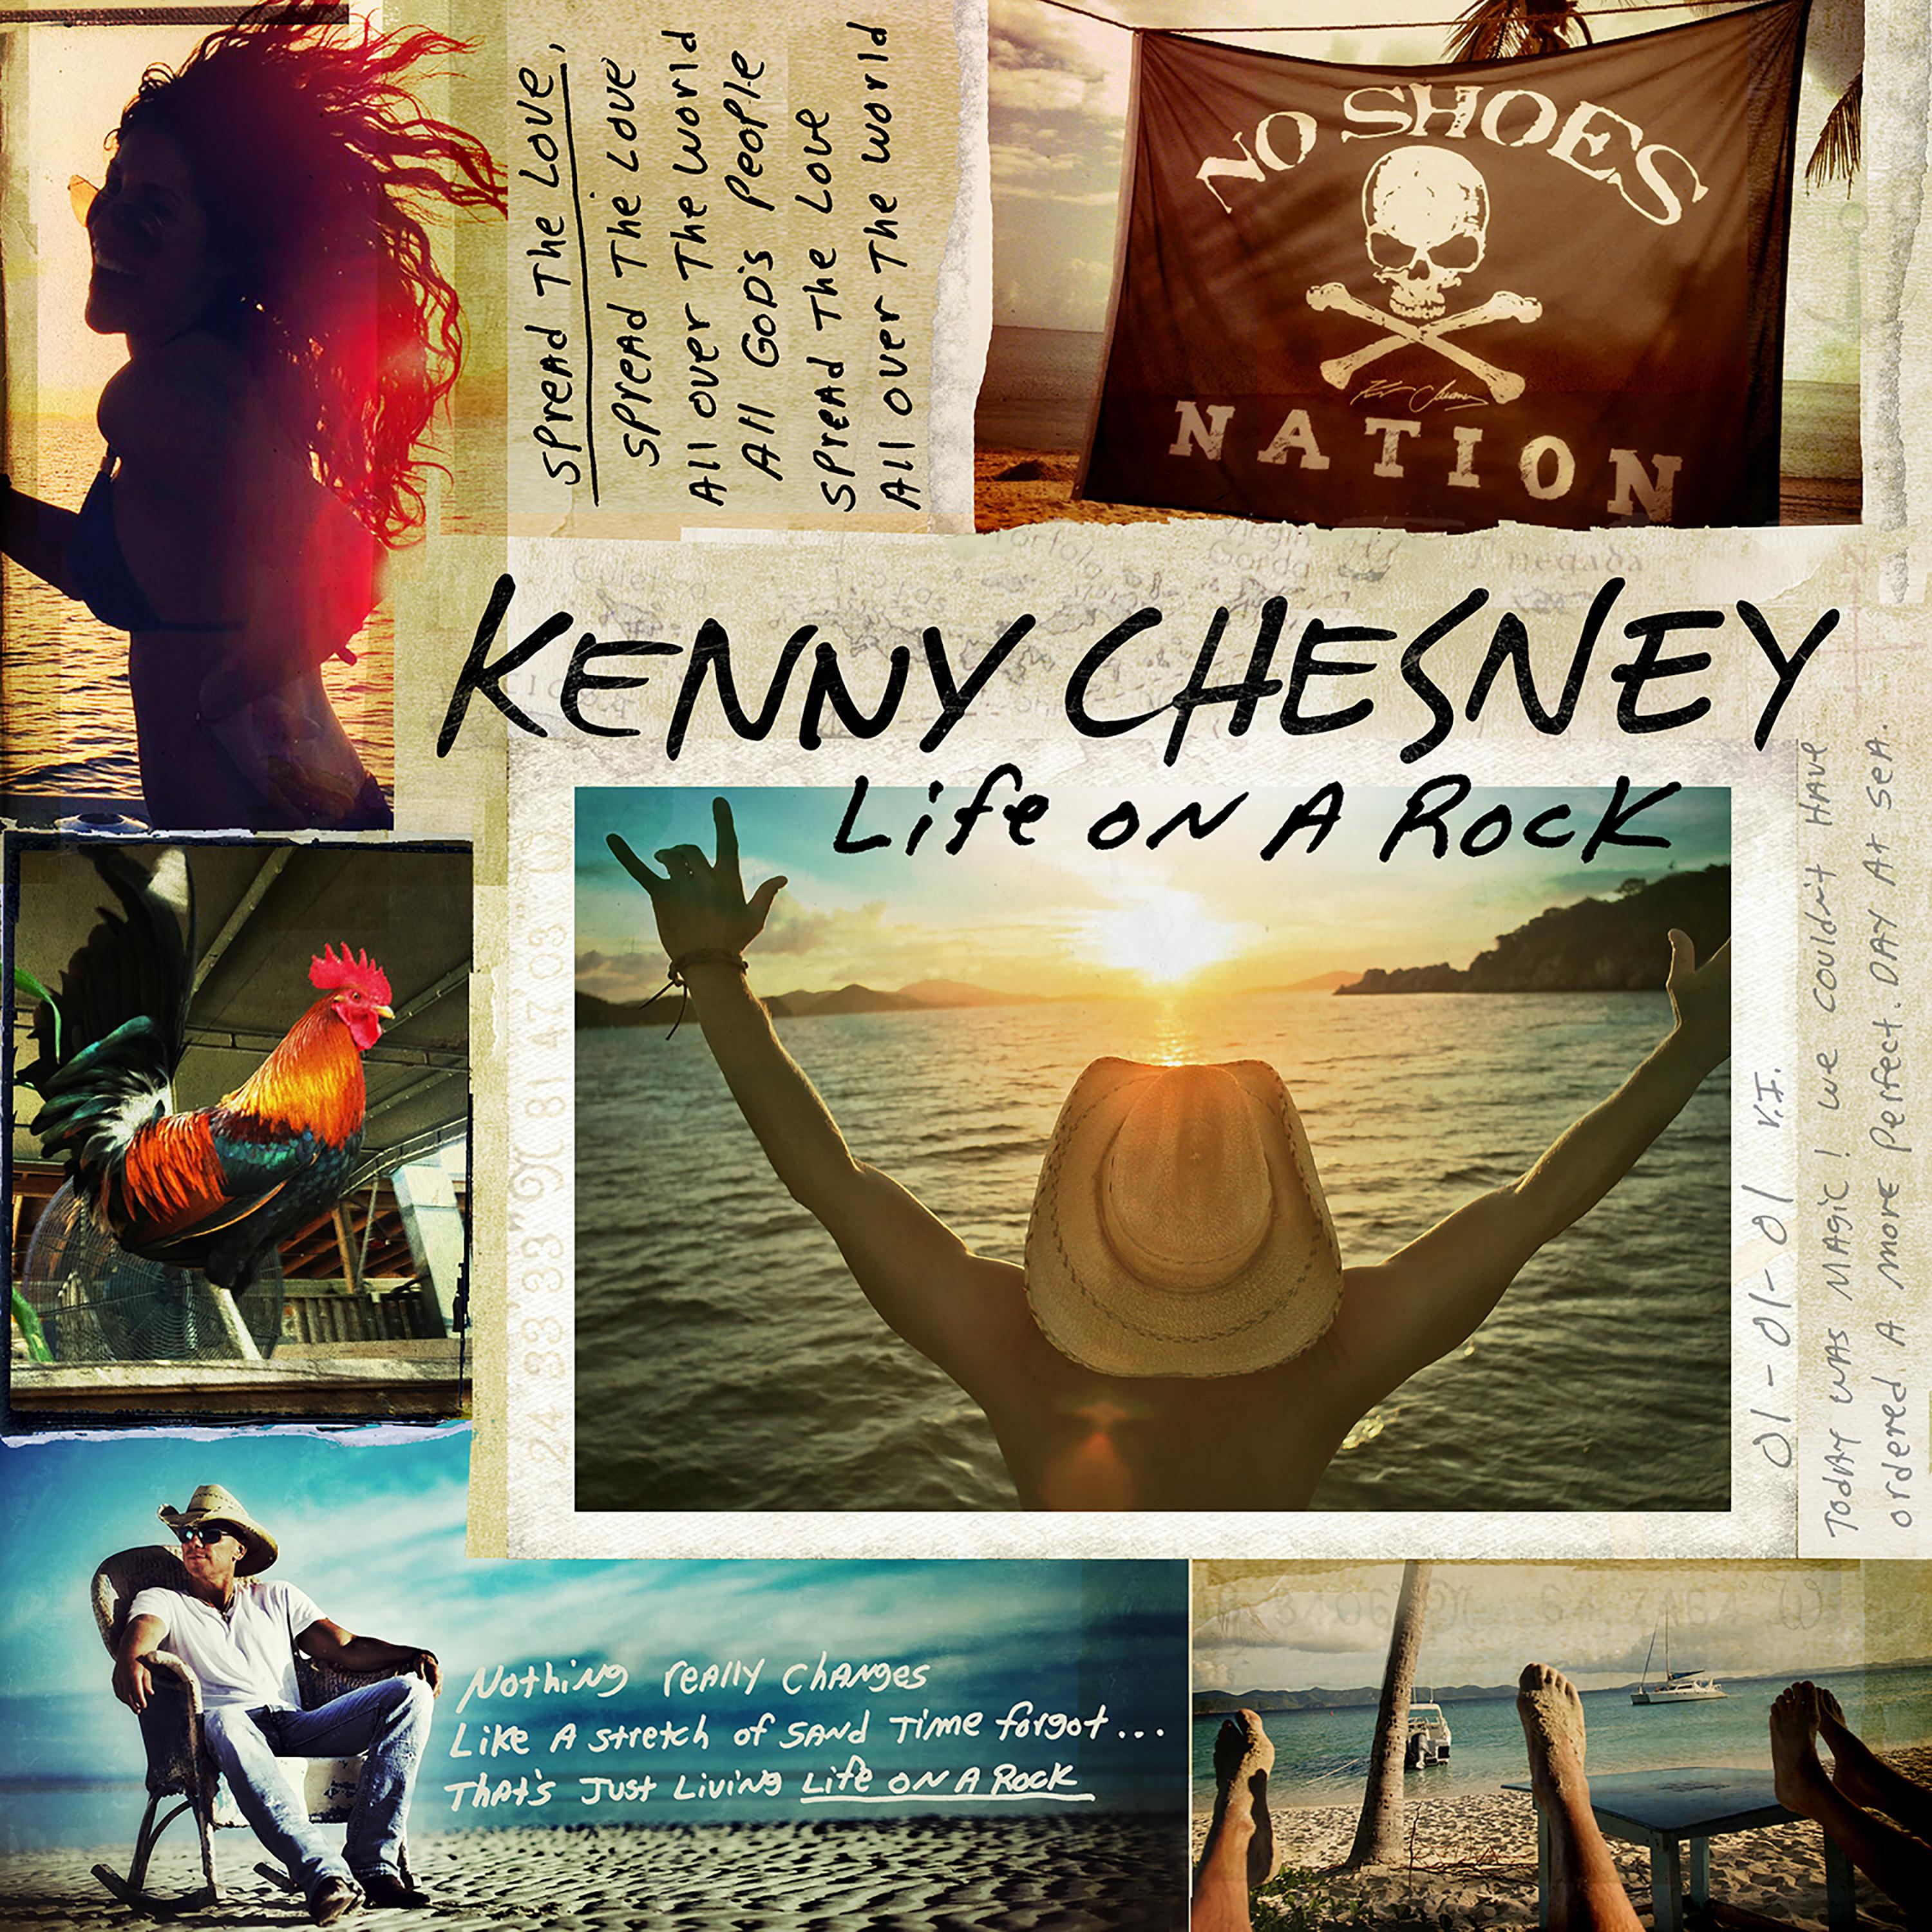 Pirate Flag歌词 歌手Kenny Chesney-专辑Life on a Rock-单曲《Pirate Flag》LRC歌词下载